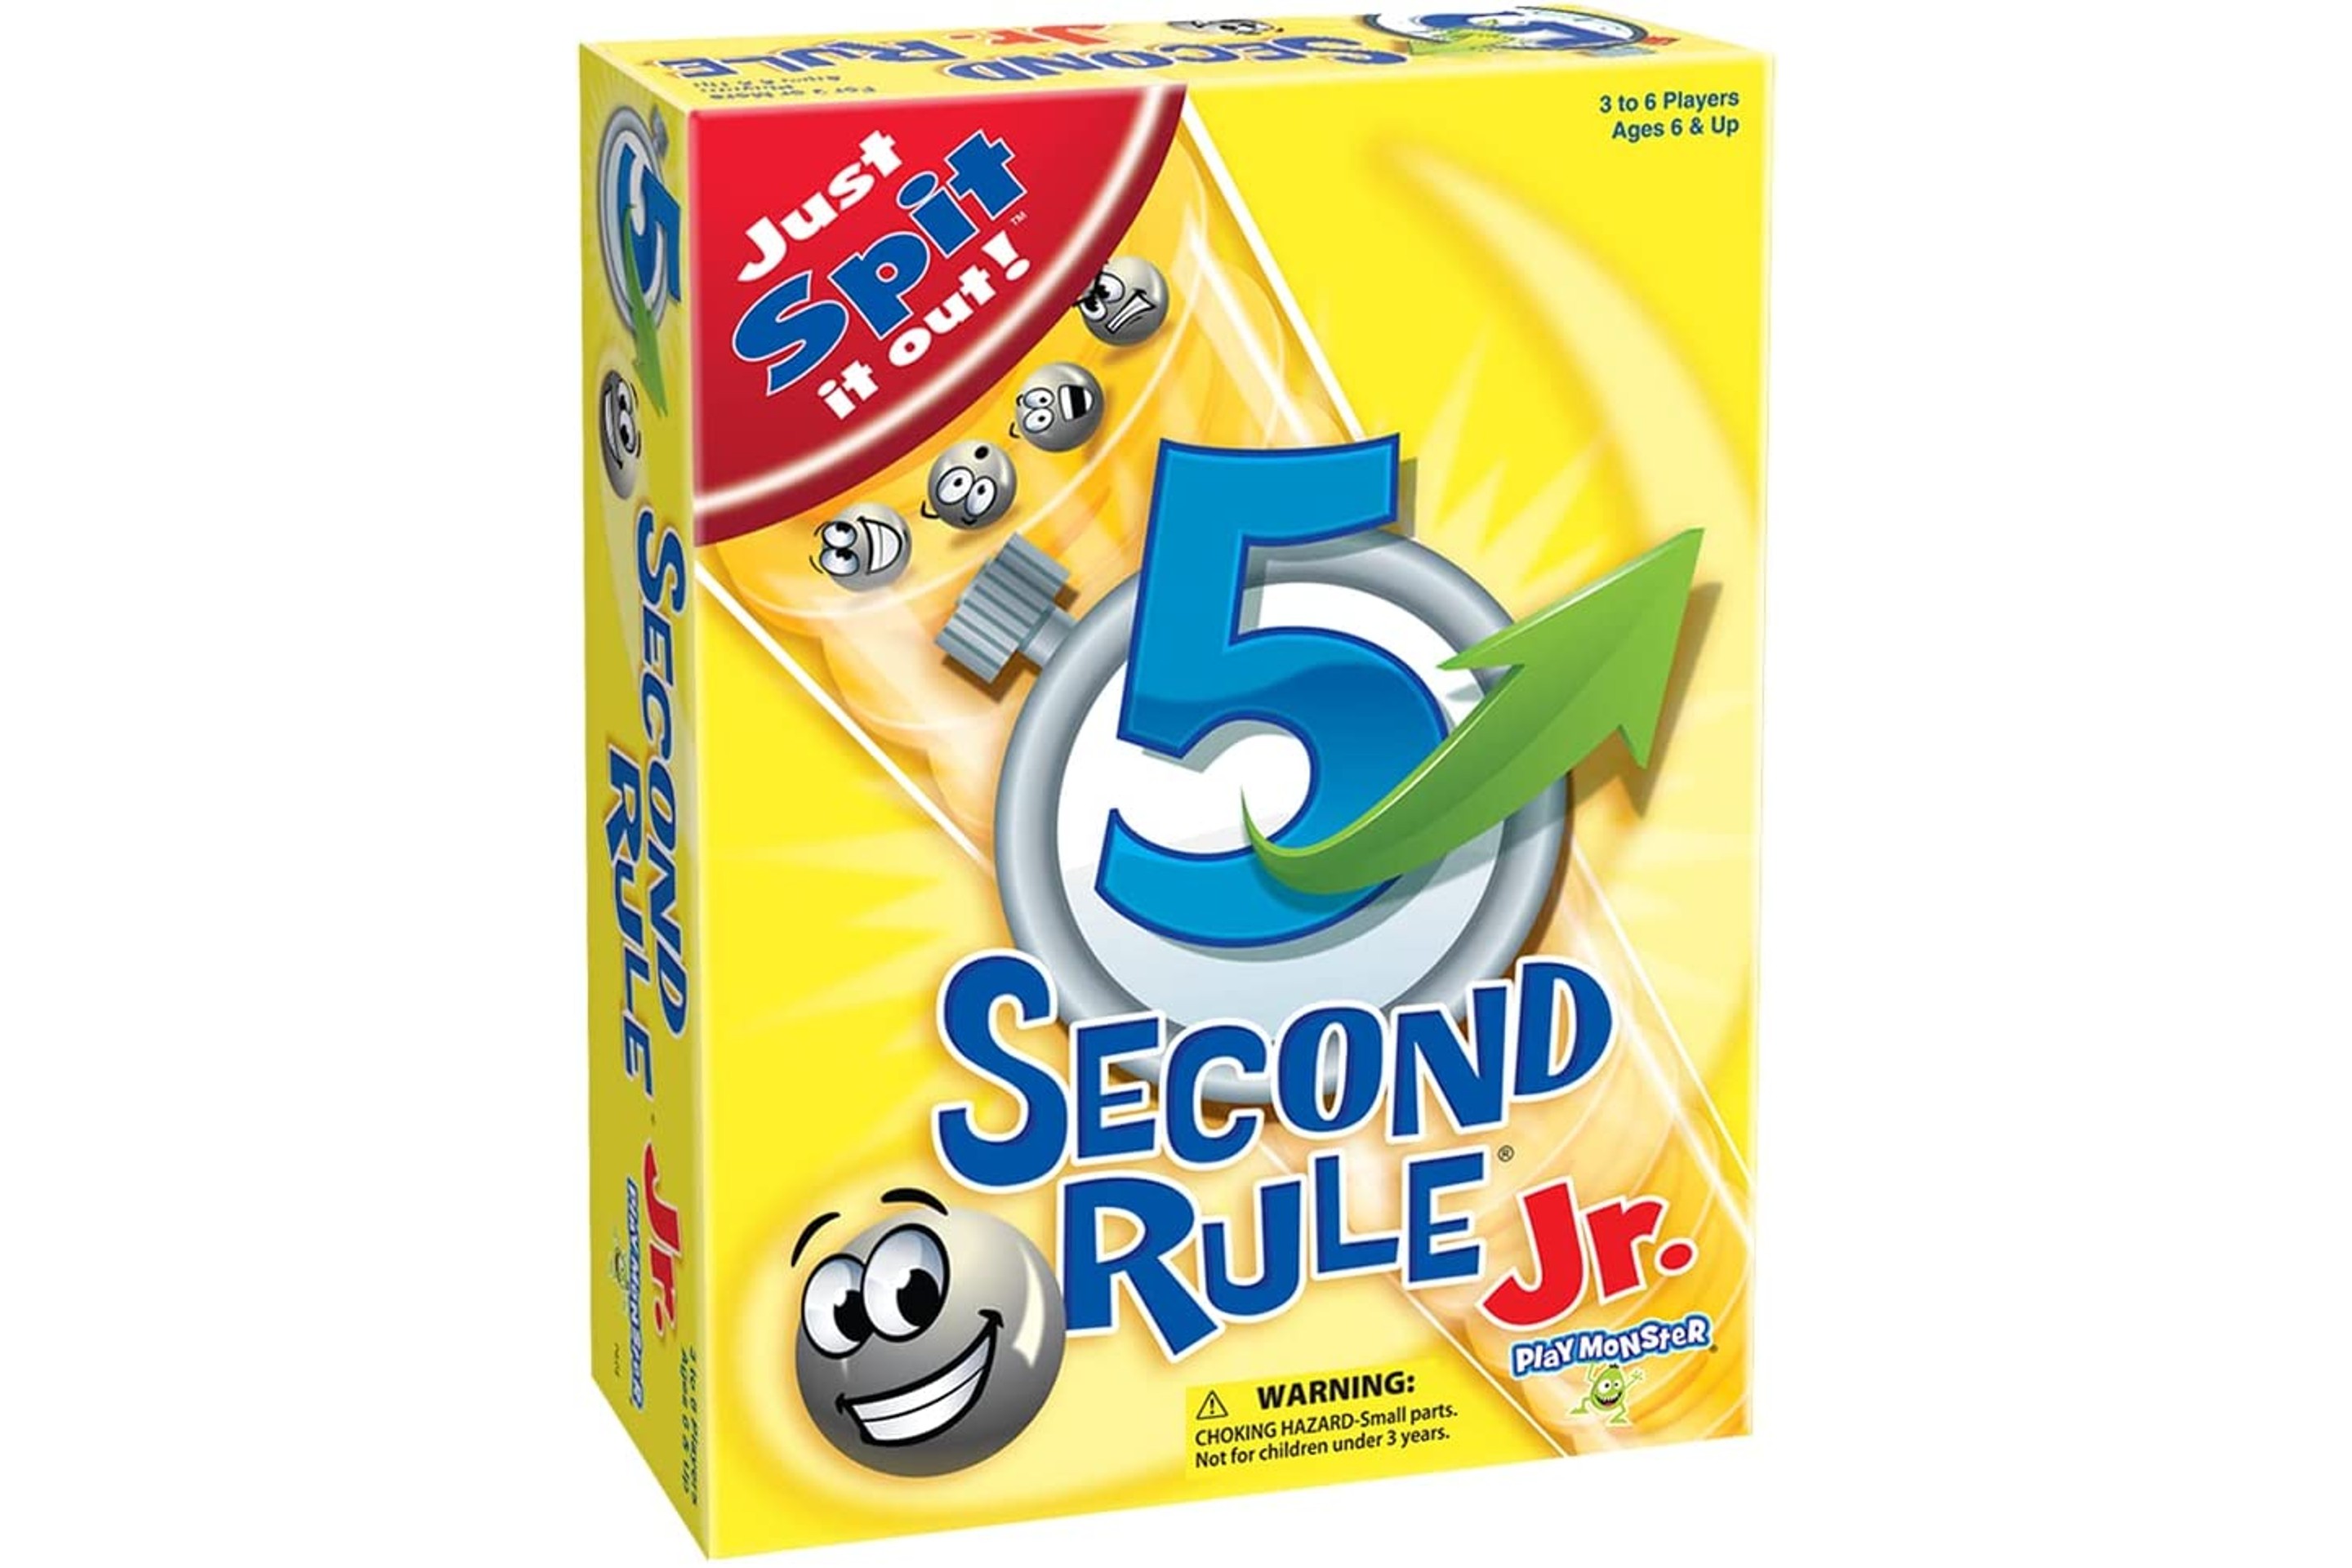 PlayMonster 5 Second Rule Jr. Board Game